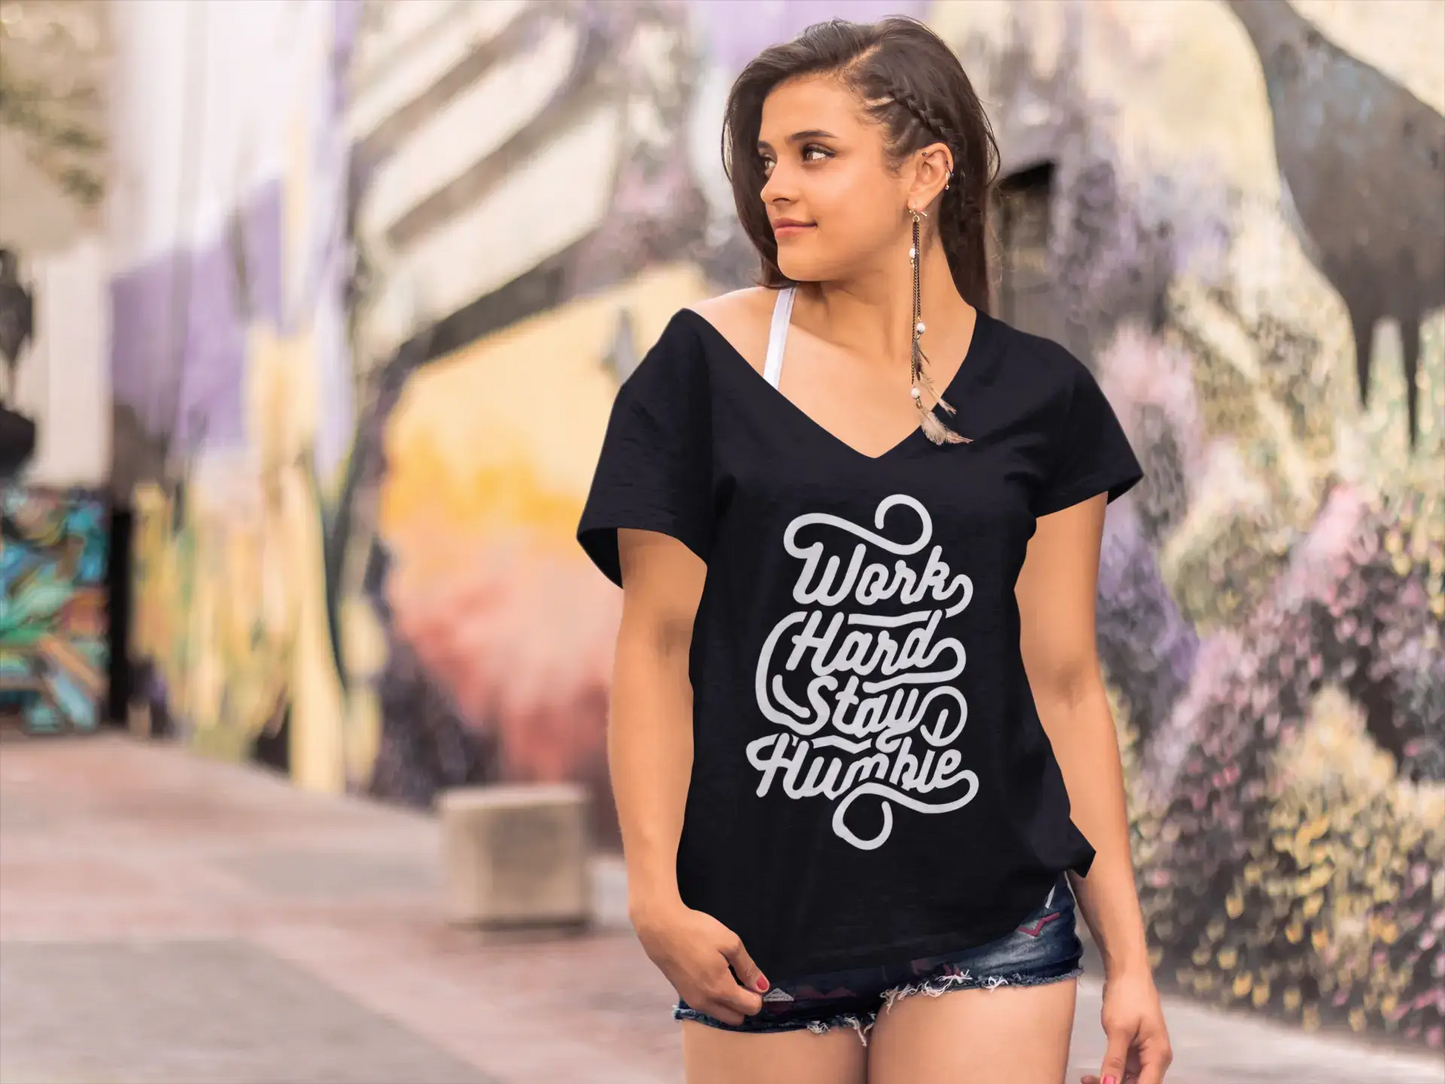 ULTRABASIC Women's T-Shirt Work Hard Stay Humble - Motivational Slogan Tee